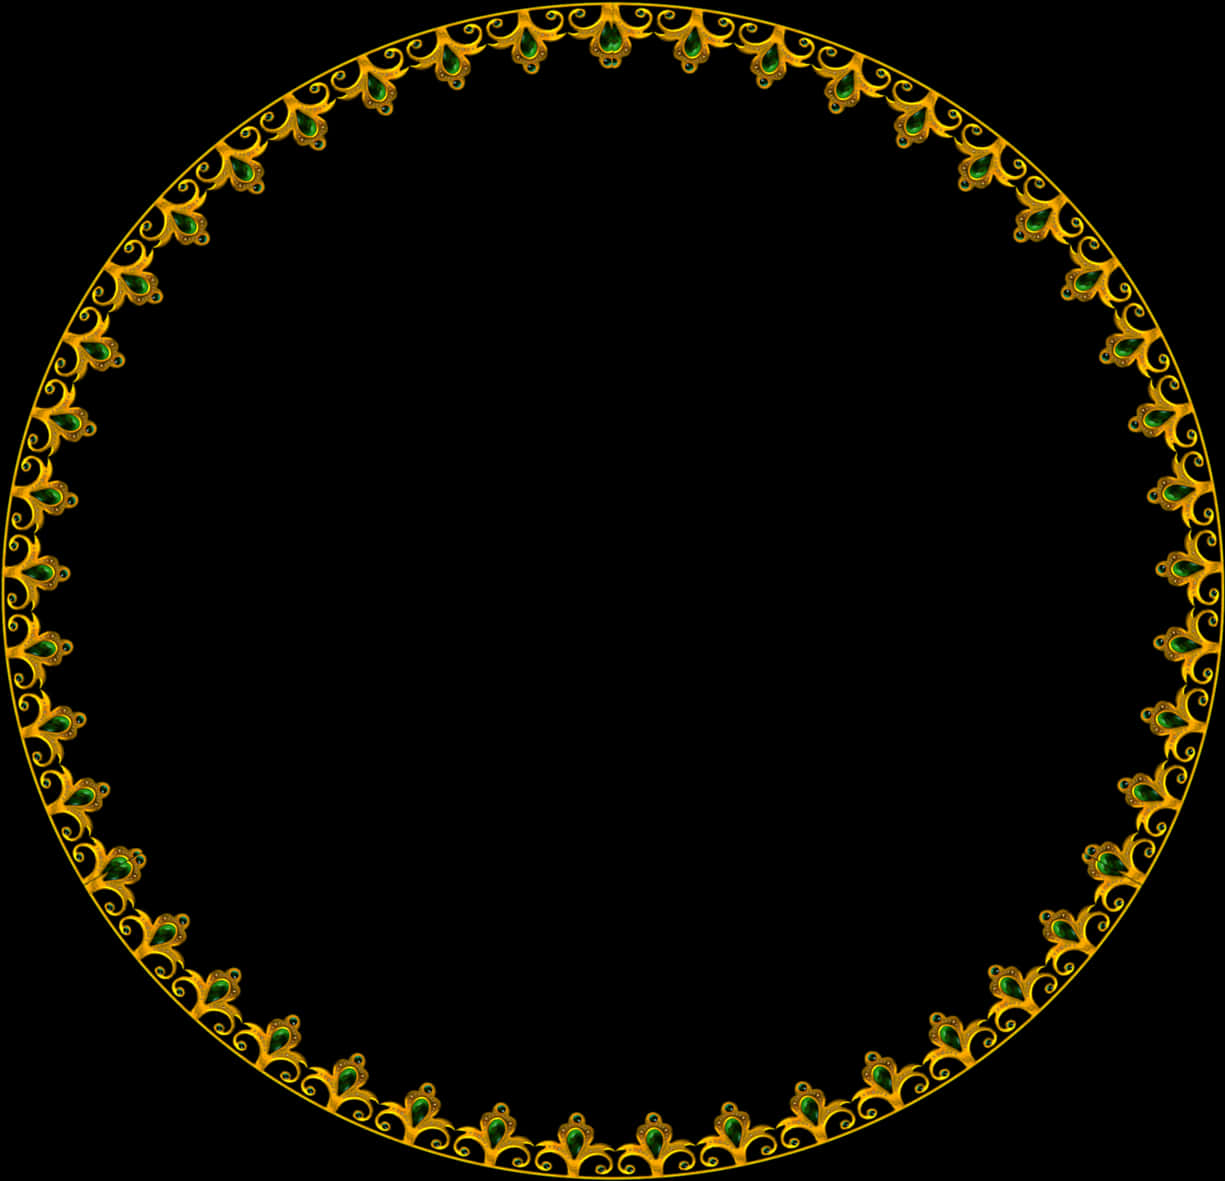 A Circular Gold And Green Design